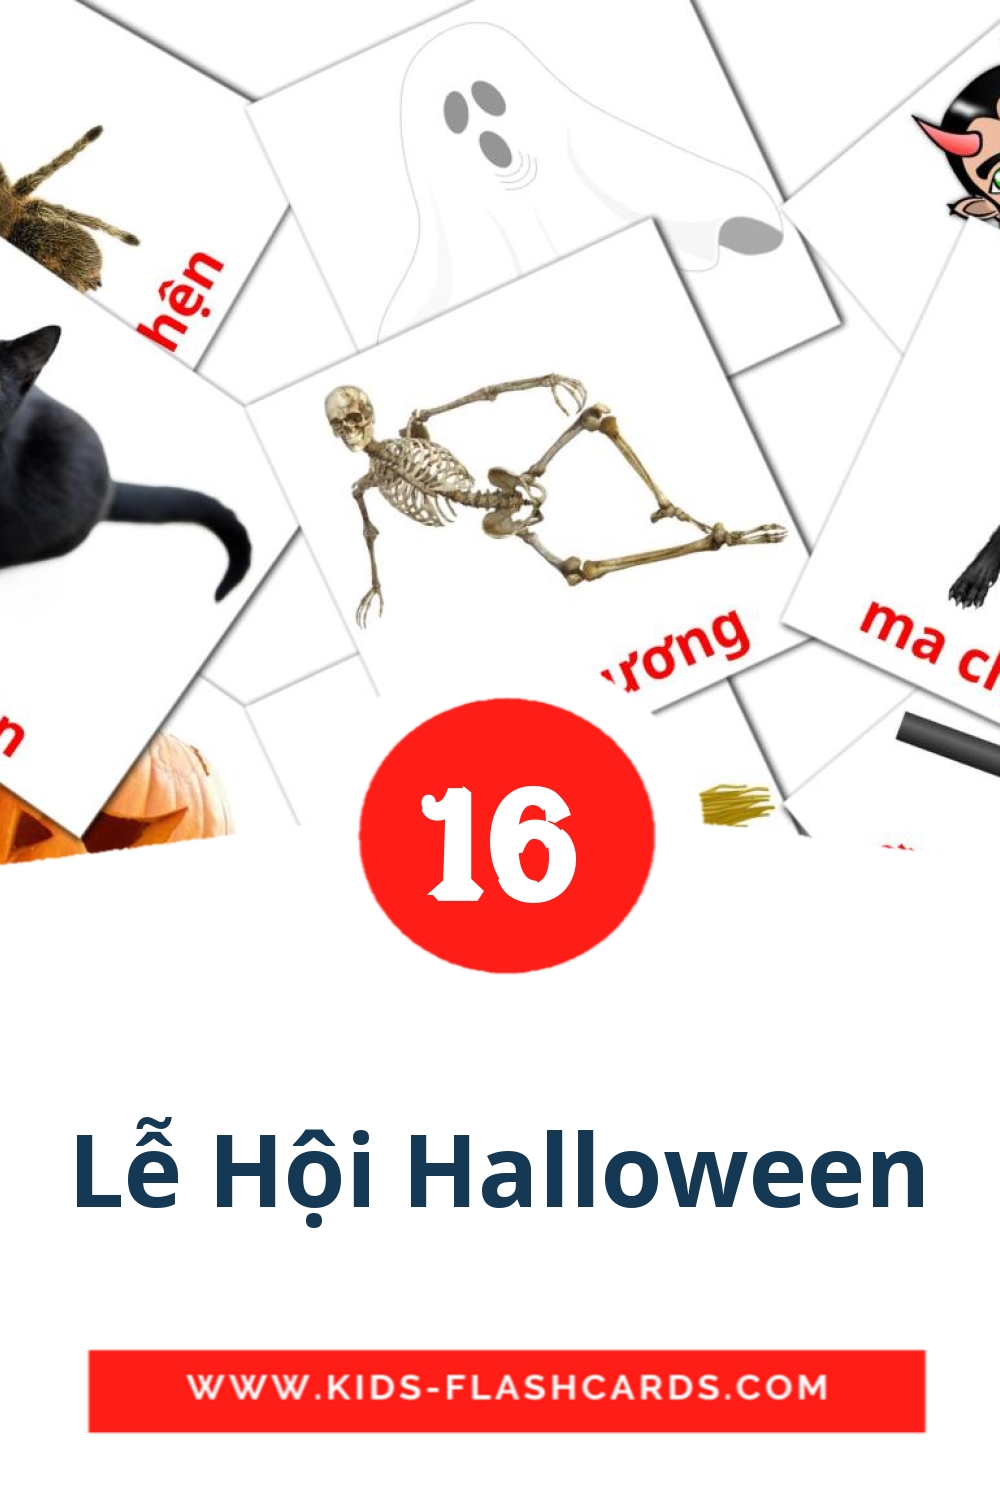 16 carte illustrate di Lễ Hội Halloween per la scuola materna in vietnamita